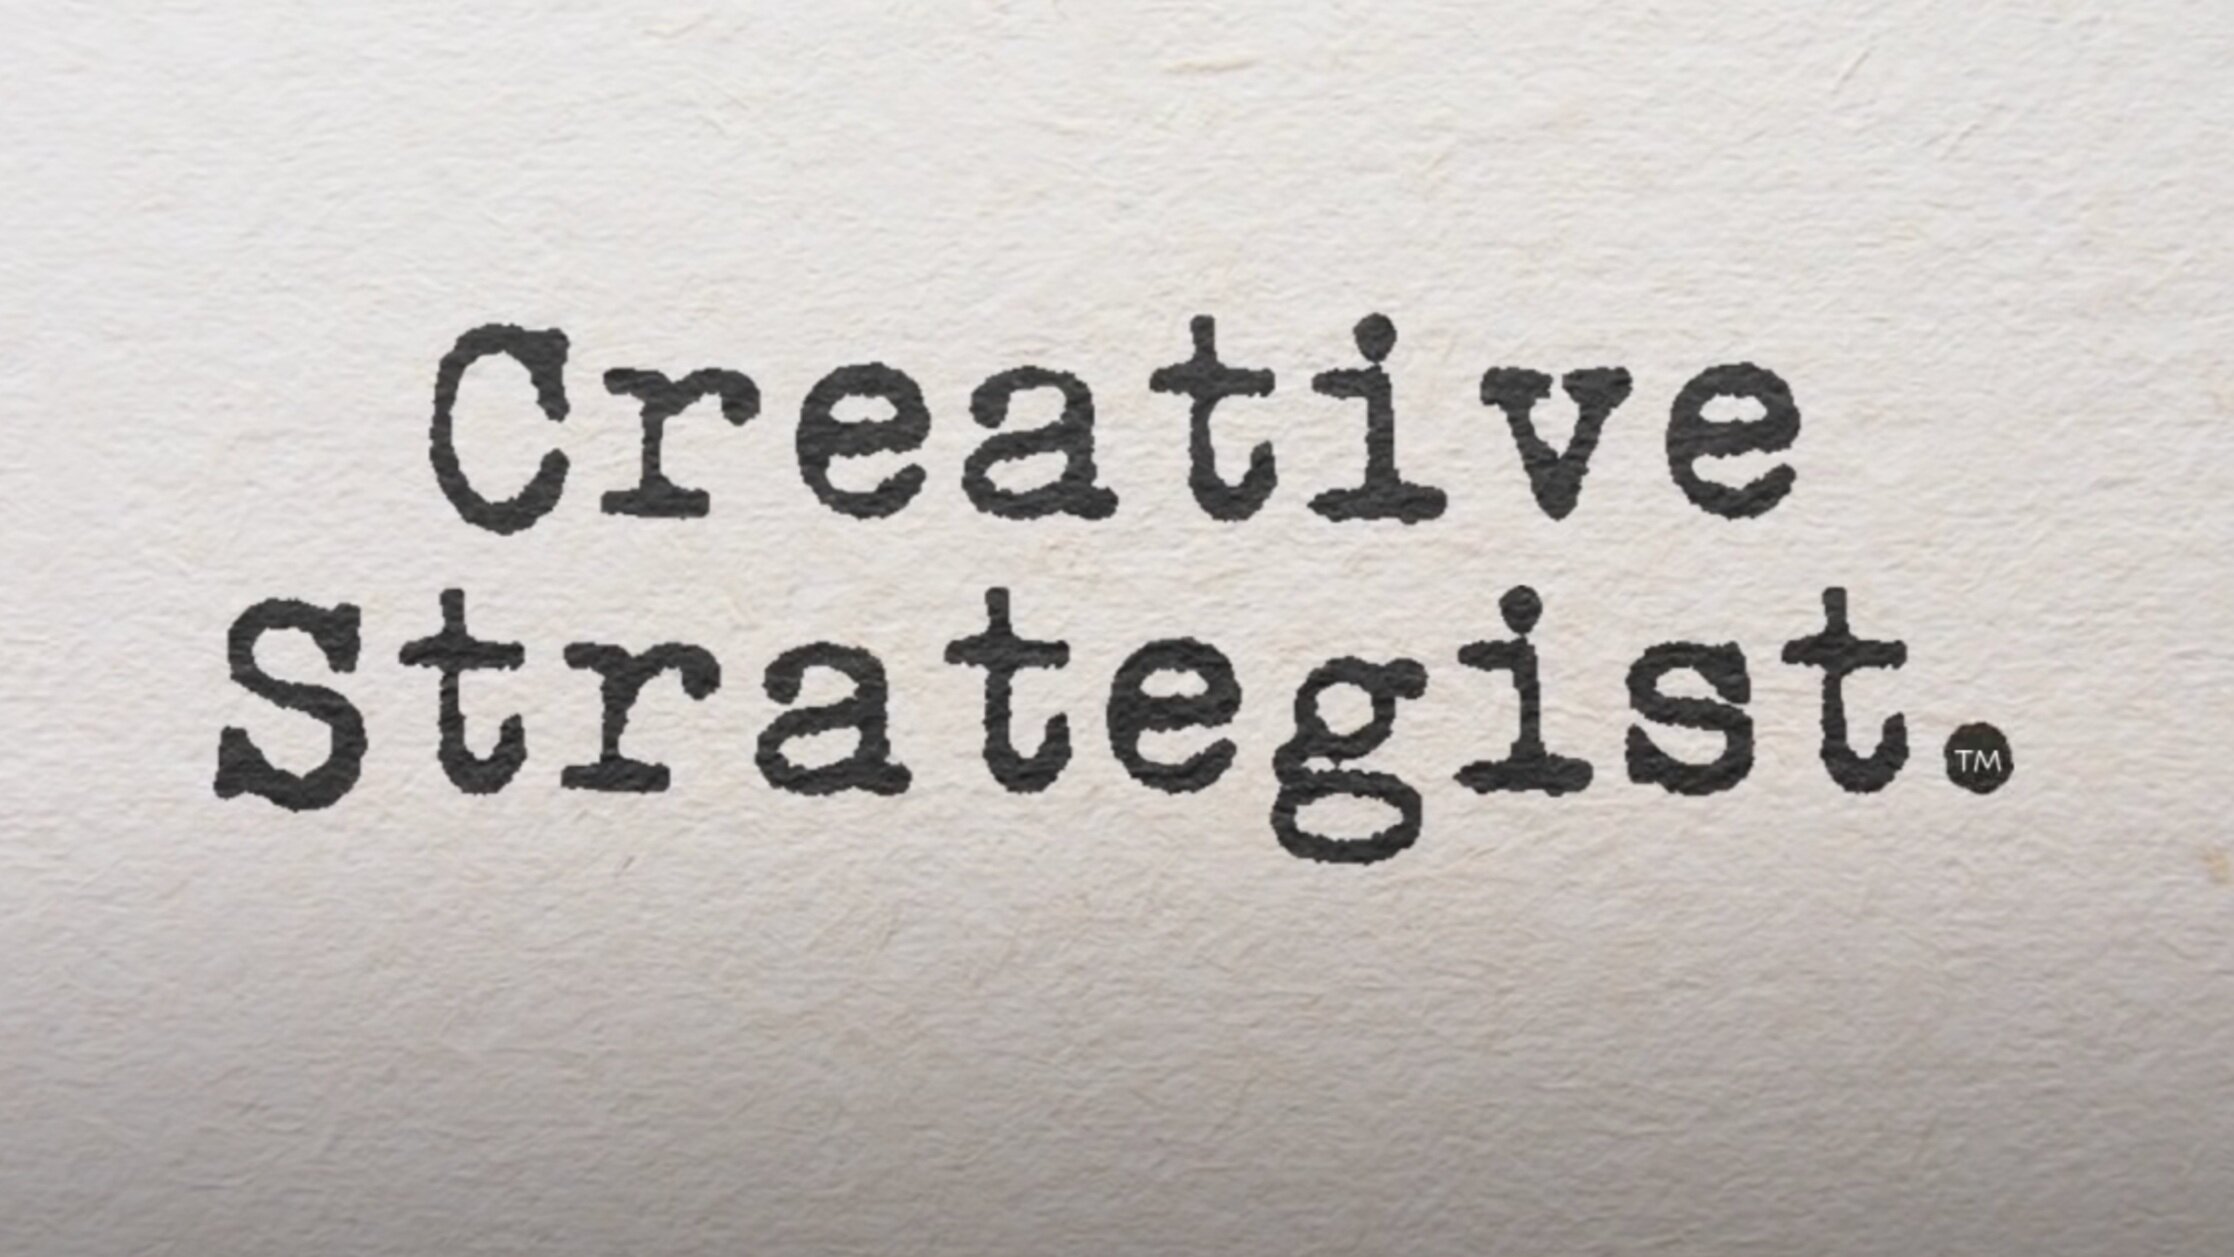 The Creative Strategist™